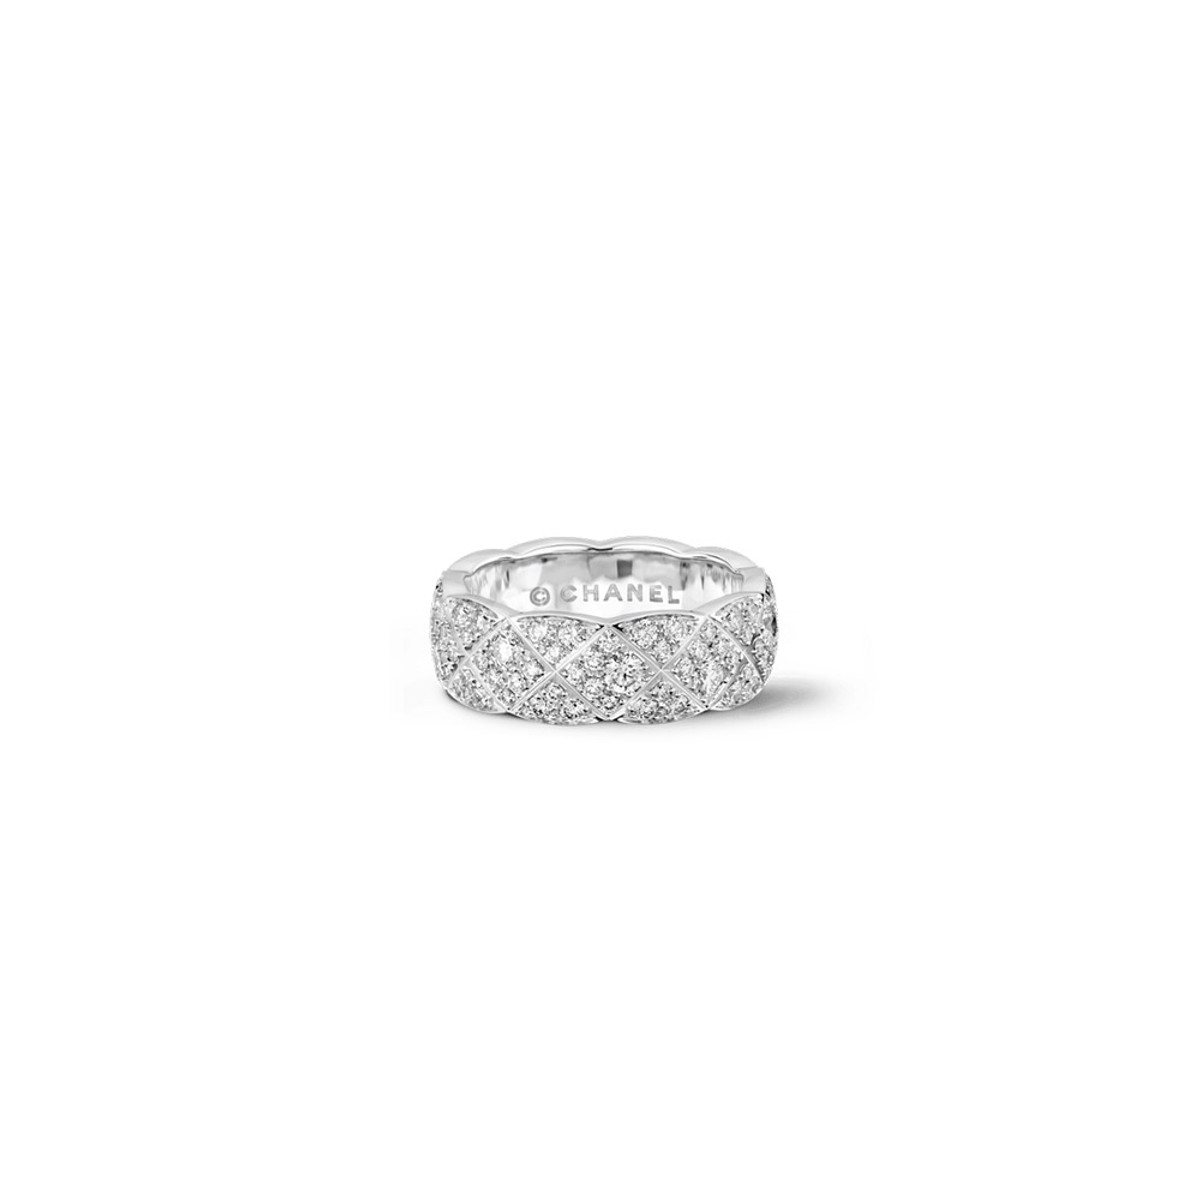 CHANEL COCO CRUSH DIAMOND RING-45469 Product Image